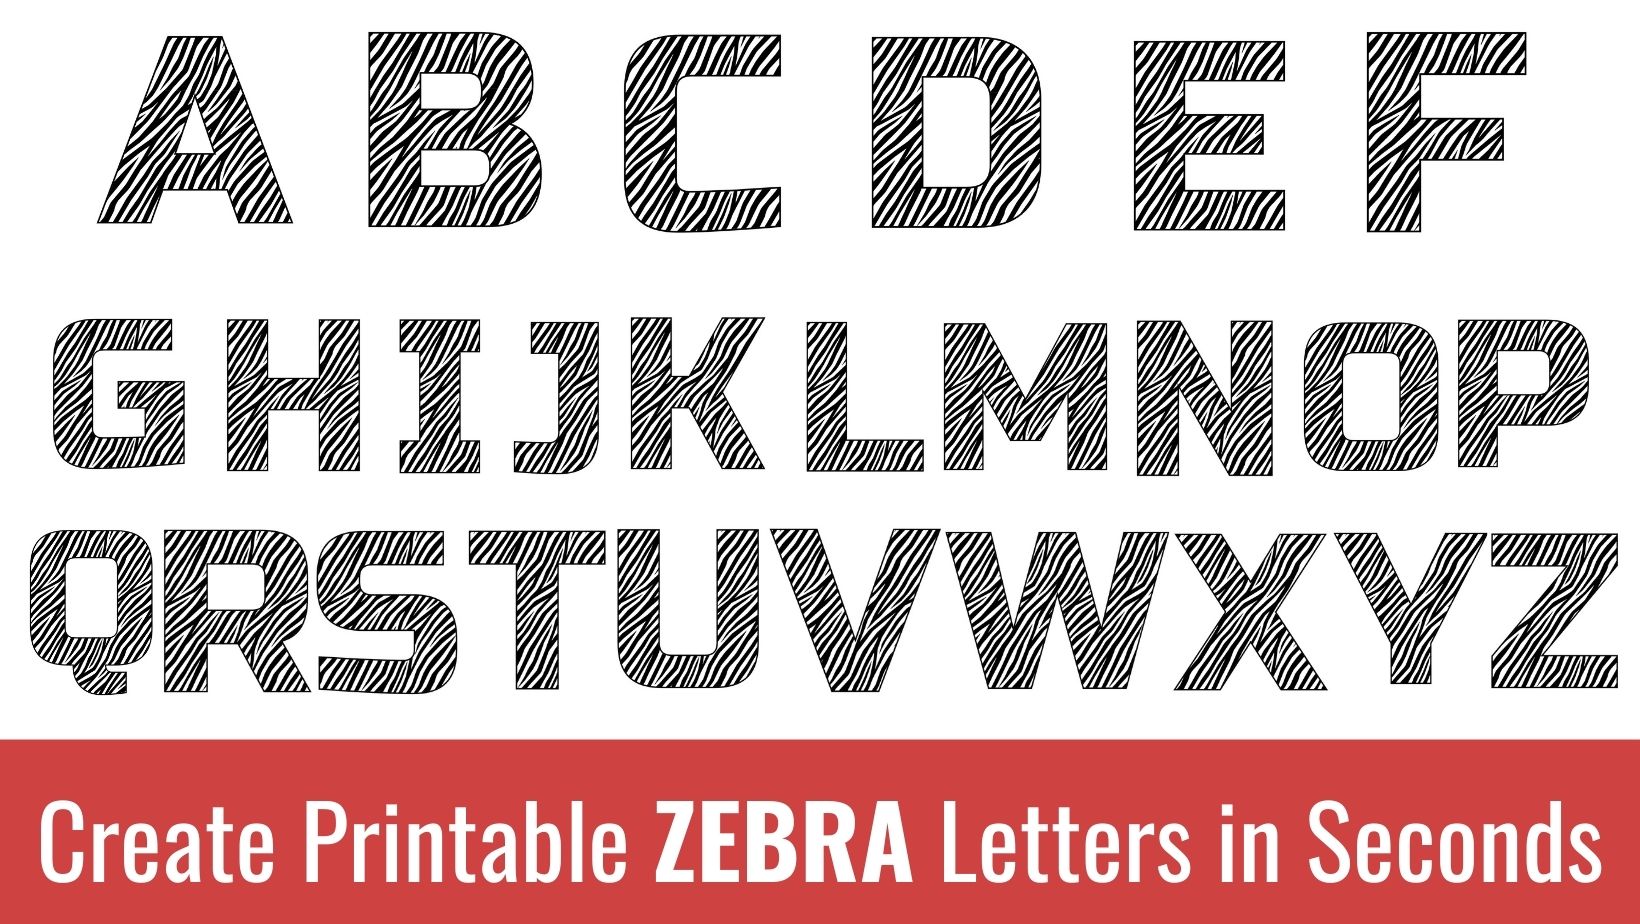 Printable zebra Letters: Free Alphabet Font and Letter Templates